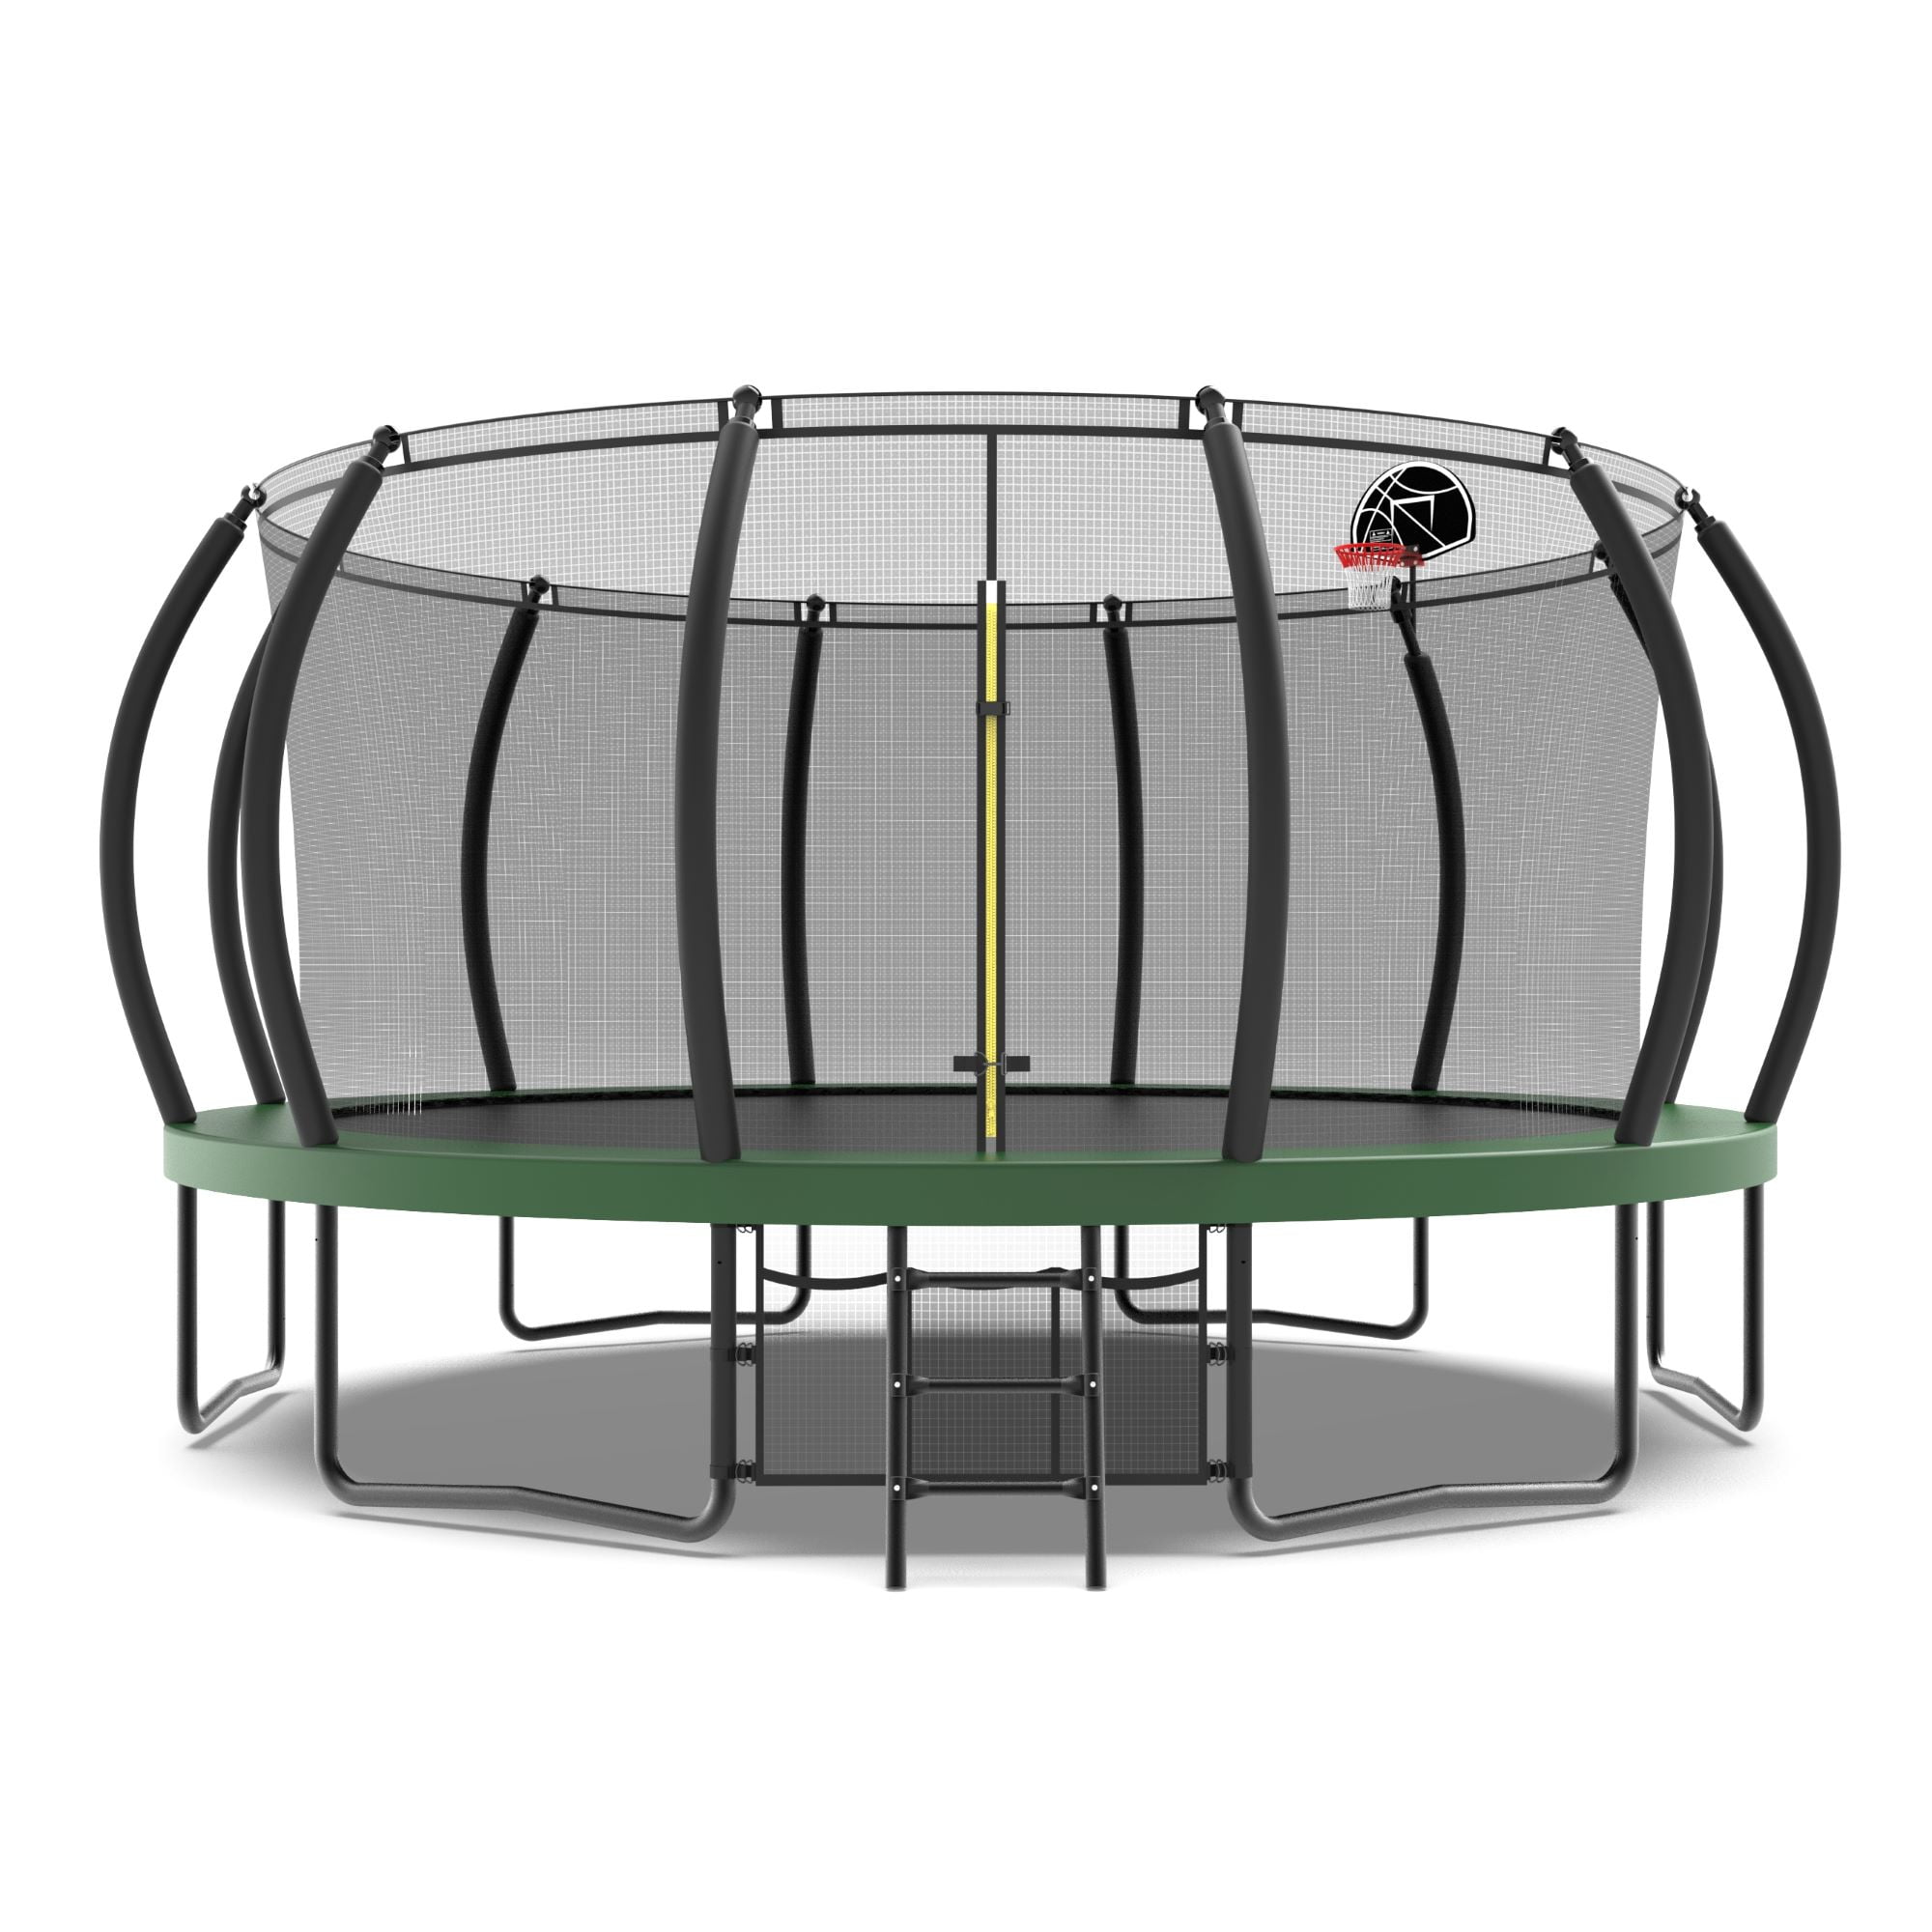 Lykos 16FT Trampoline Green with Basketball Hoop - Recreational ...